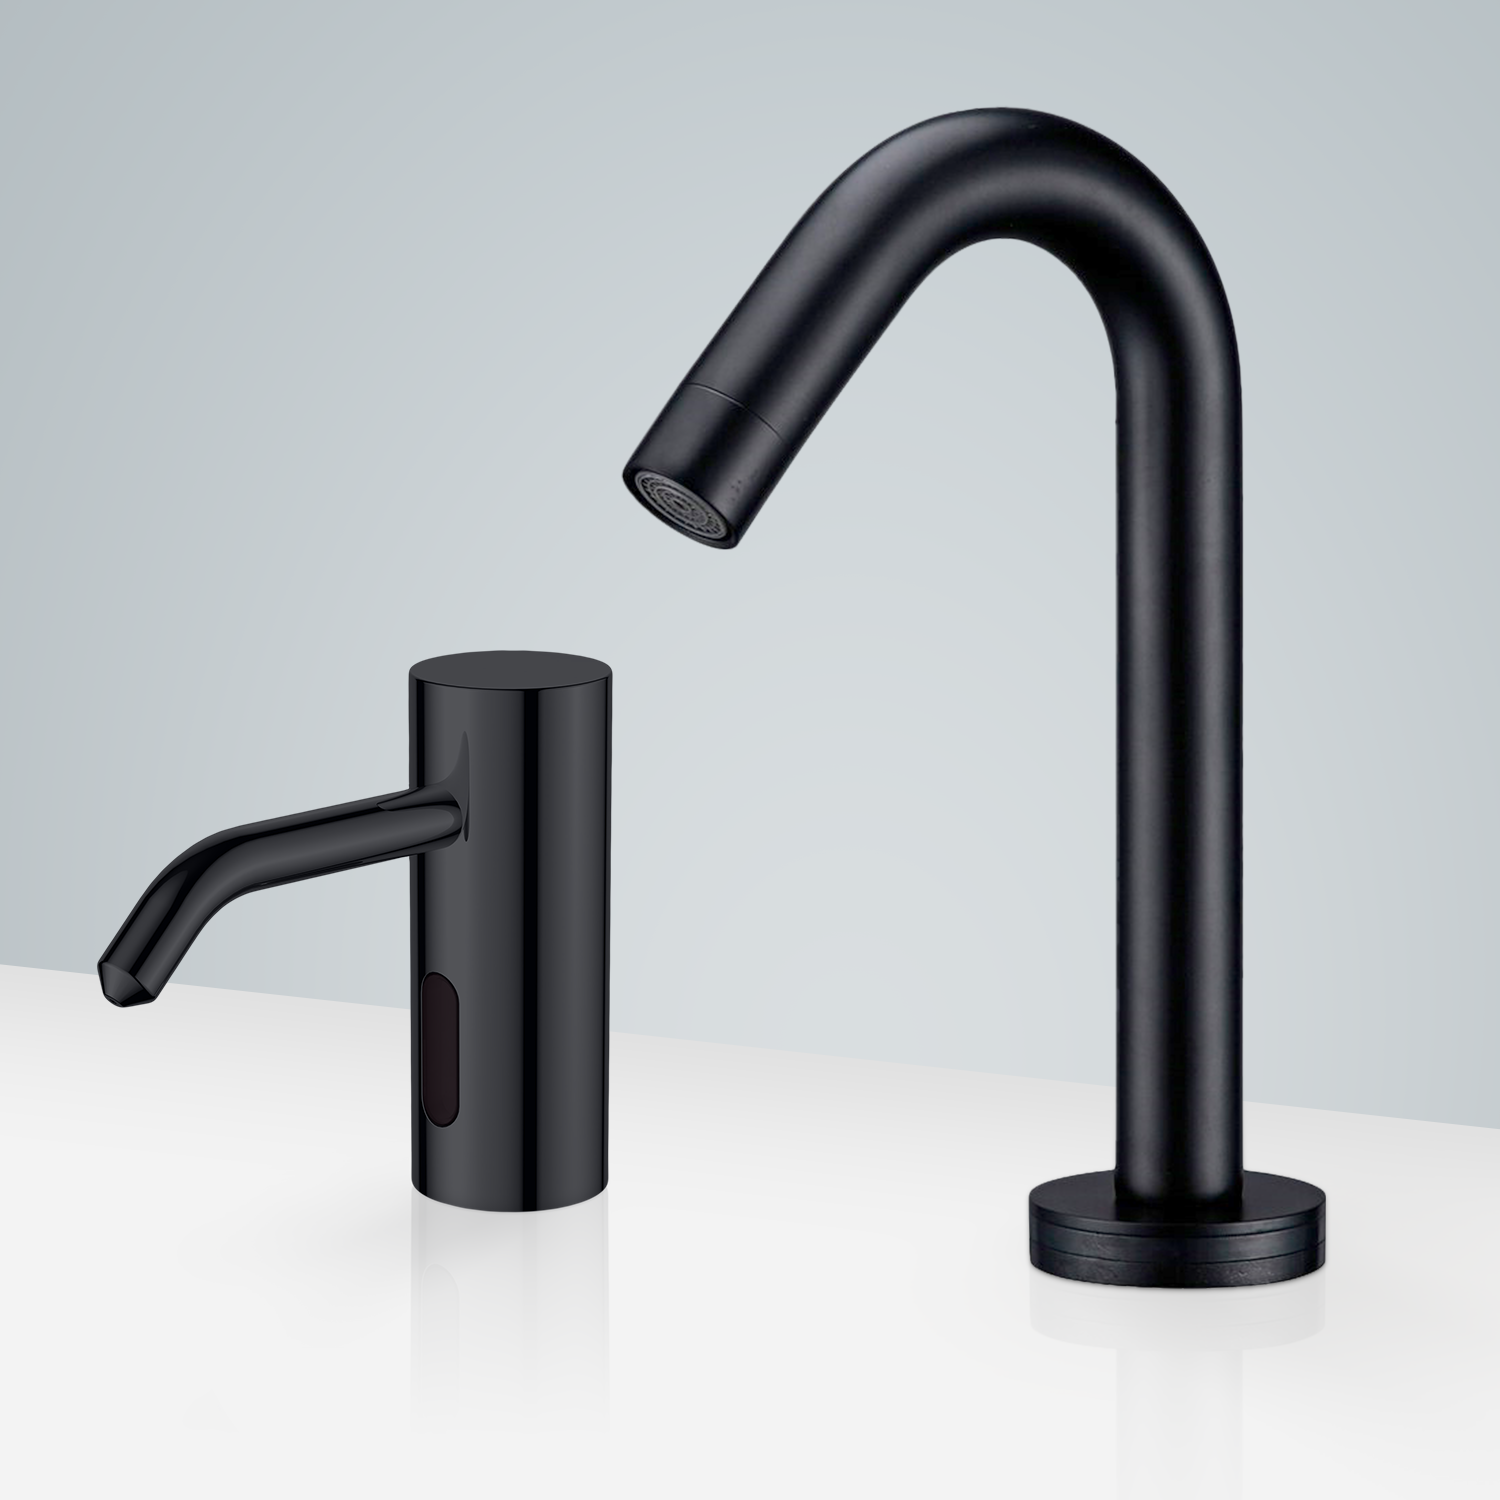 Fontana Marsala Dark Oil Rubbed Finish Motion Sensor Faucet & Automatic Soap Dispenser For Restrooms